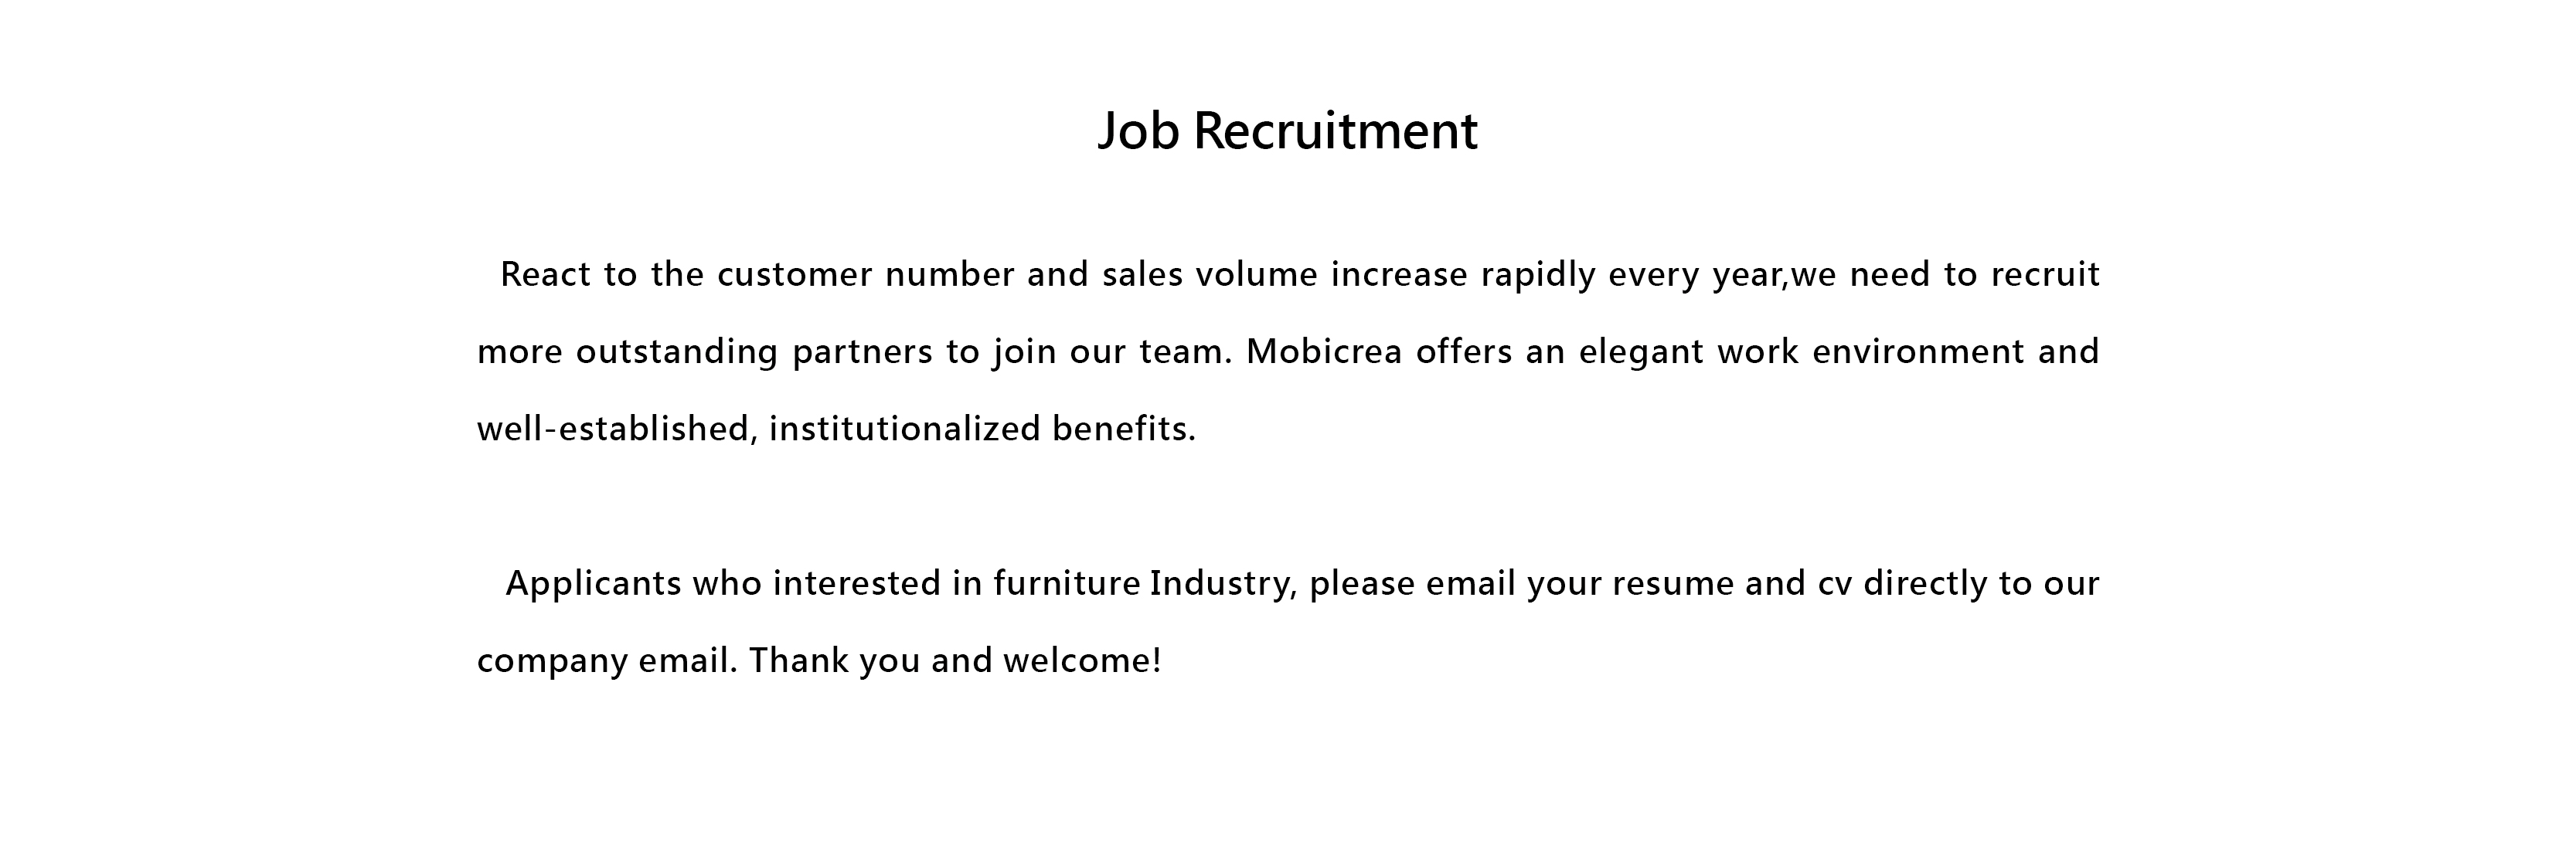 Job Recruitment